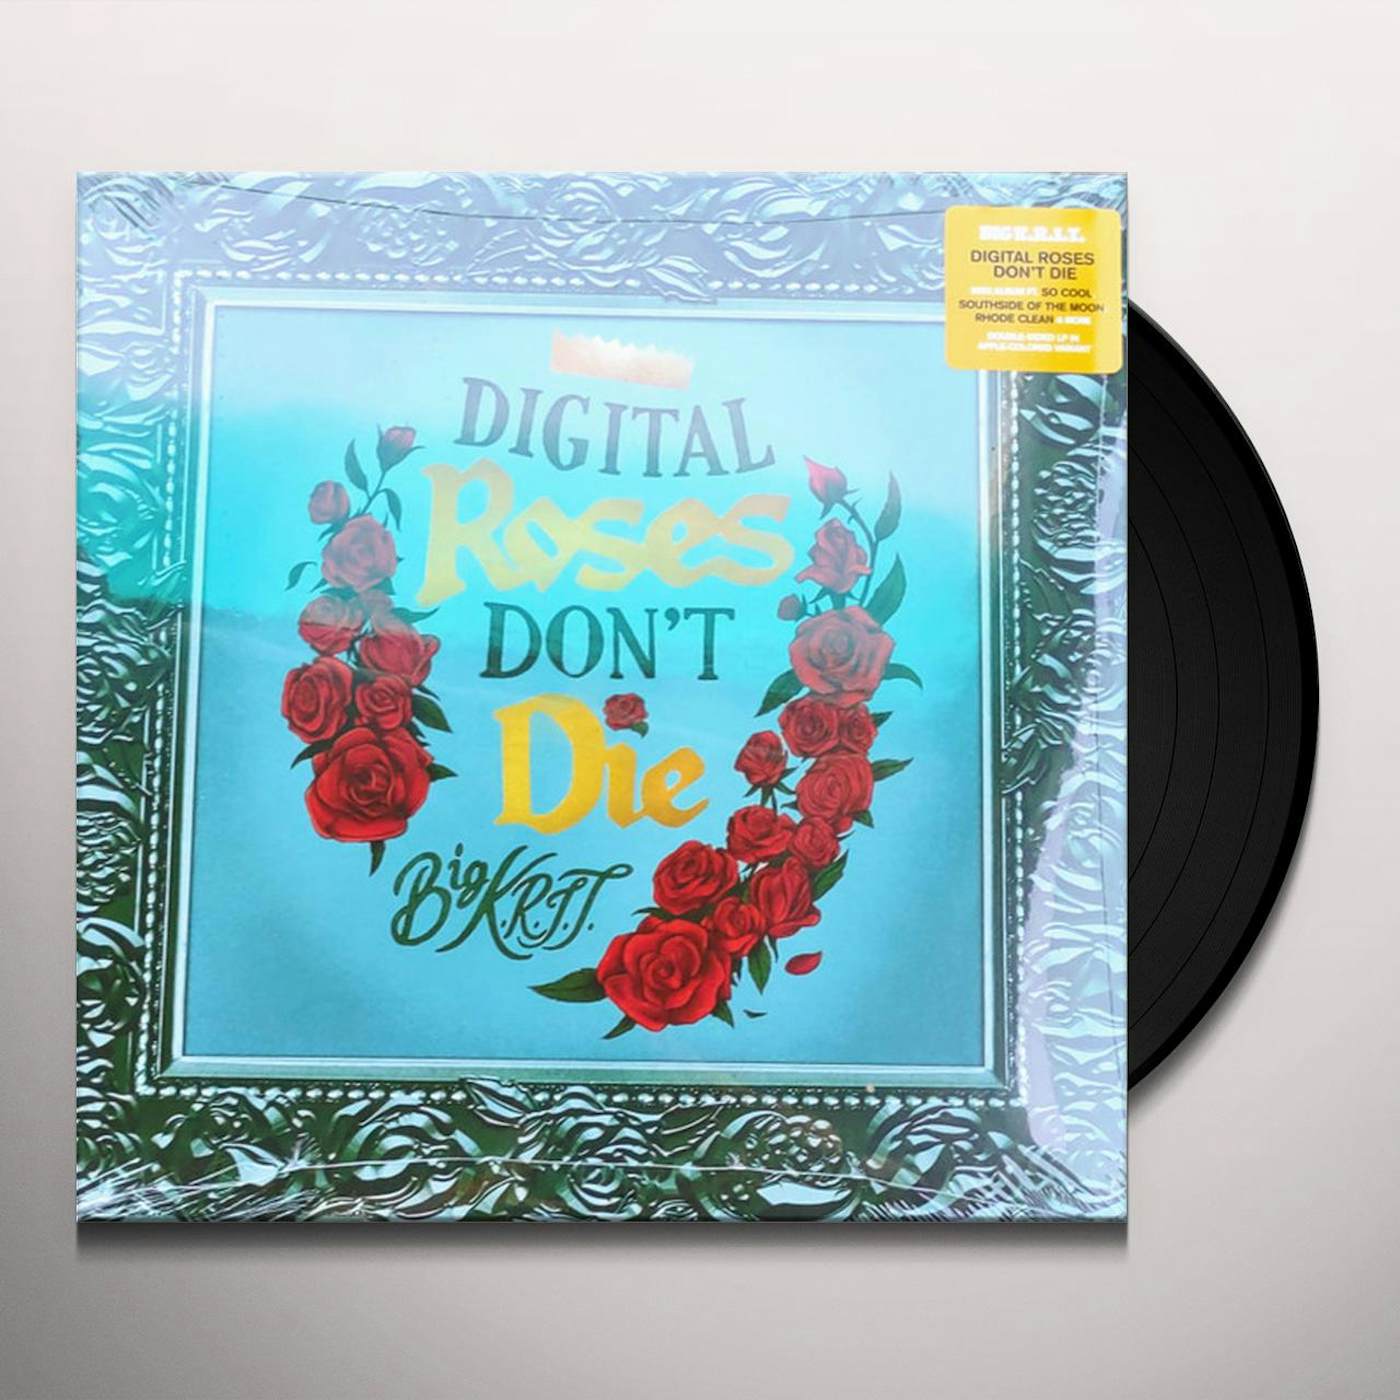 Big K.R.I.T. Digital Roses Don't Die Vinyl Record